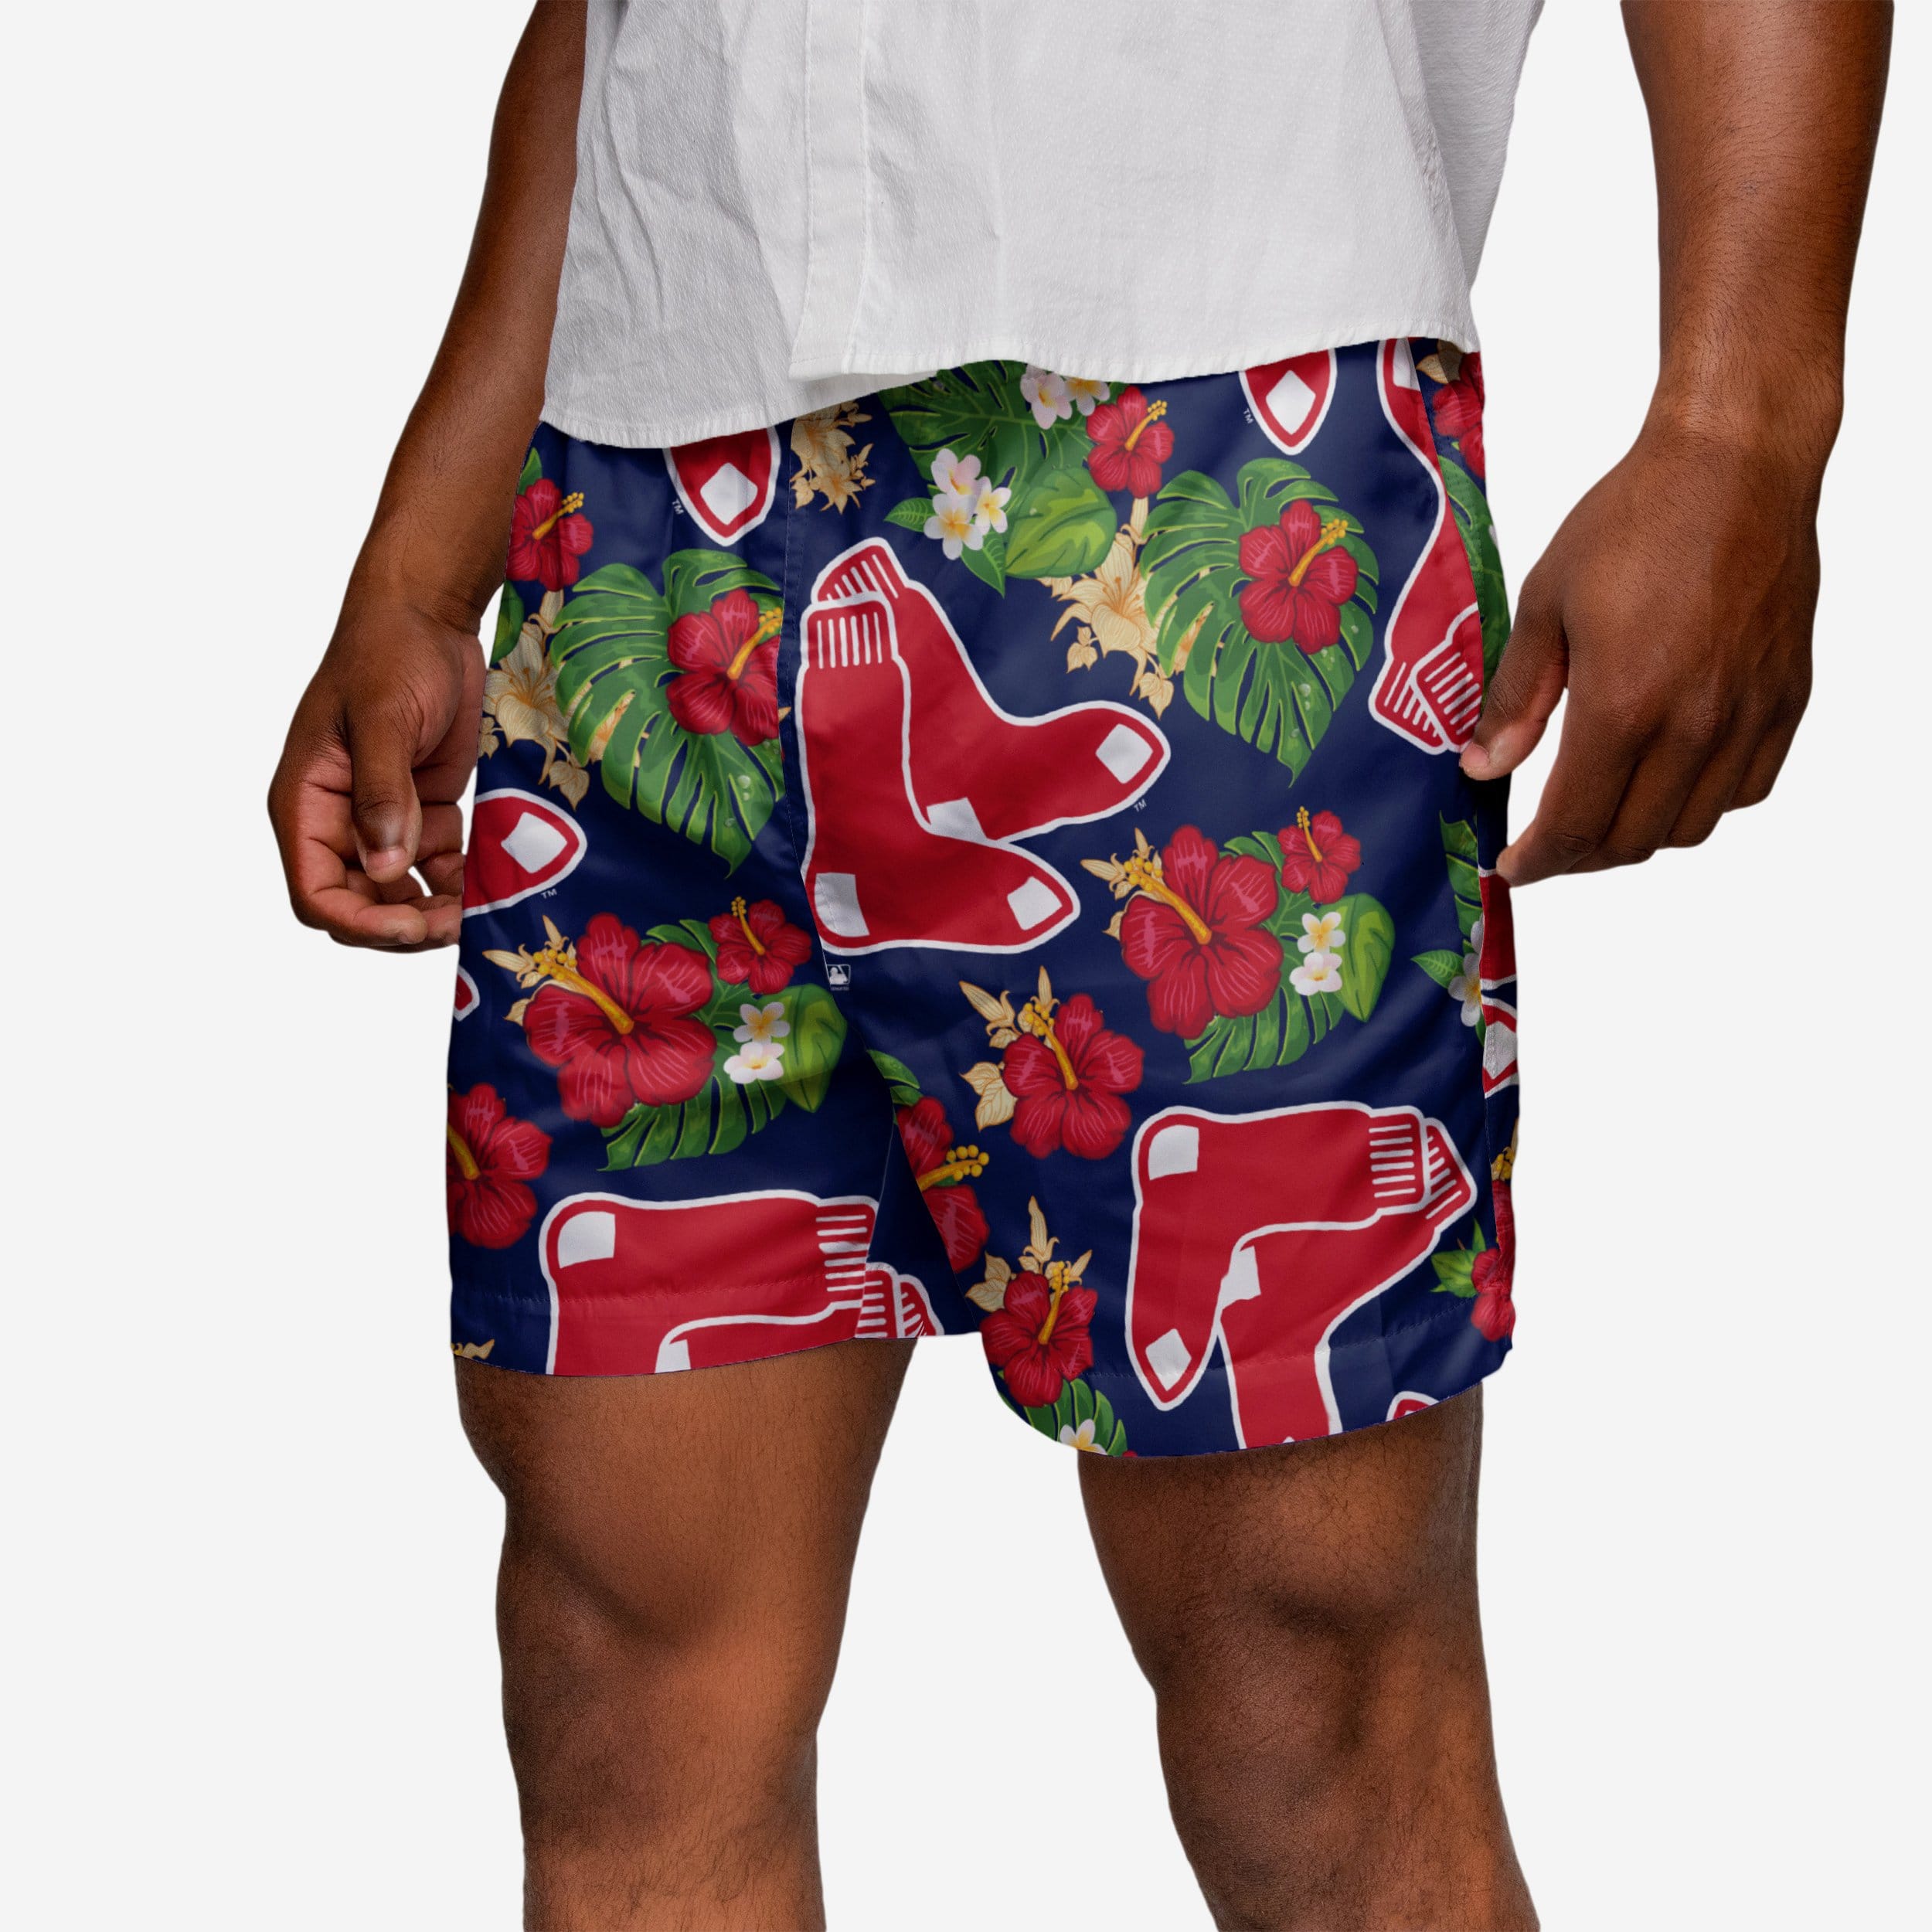 Boston Red Sox MLB Tropical Coconut Tree Sunset Design 3D Hawaiian Shirt  For Men And Women - Banantees